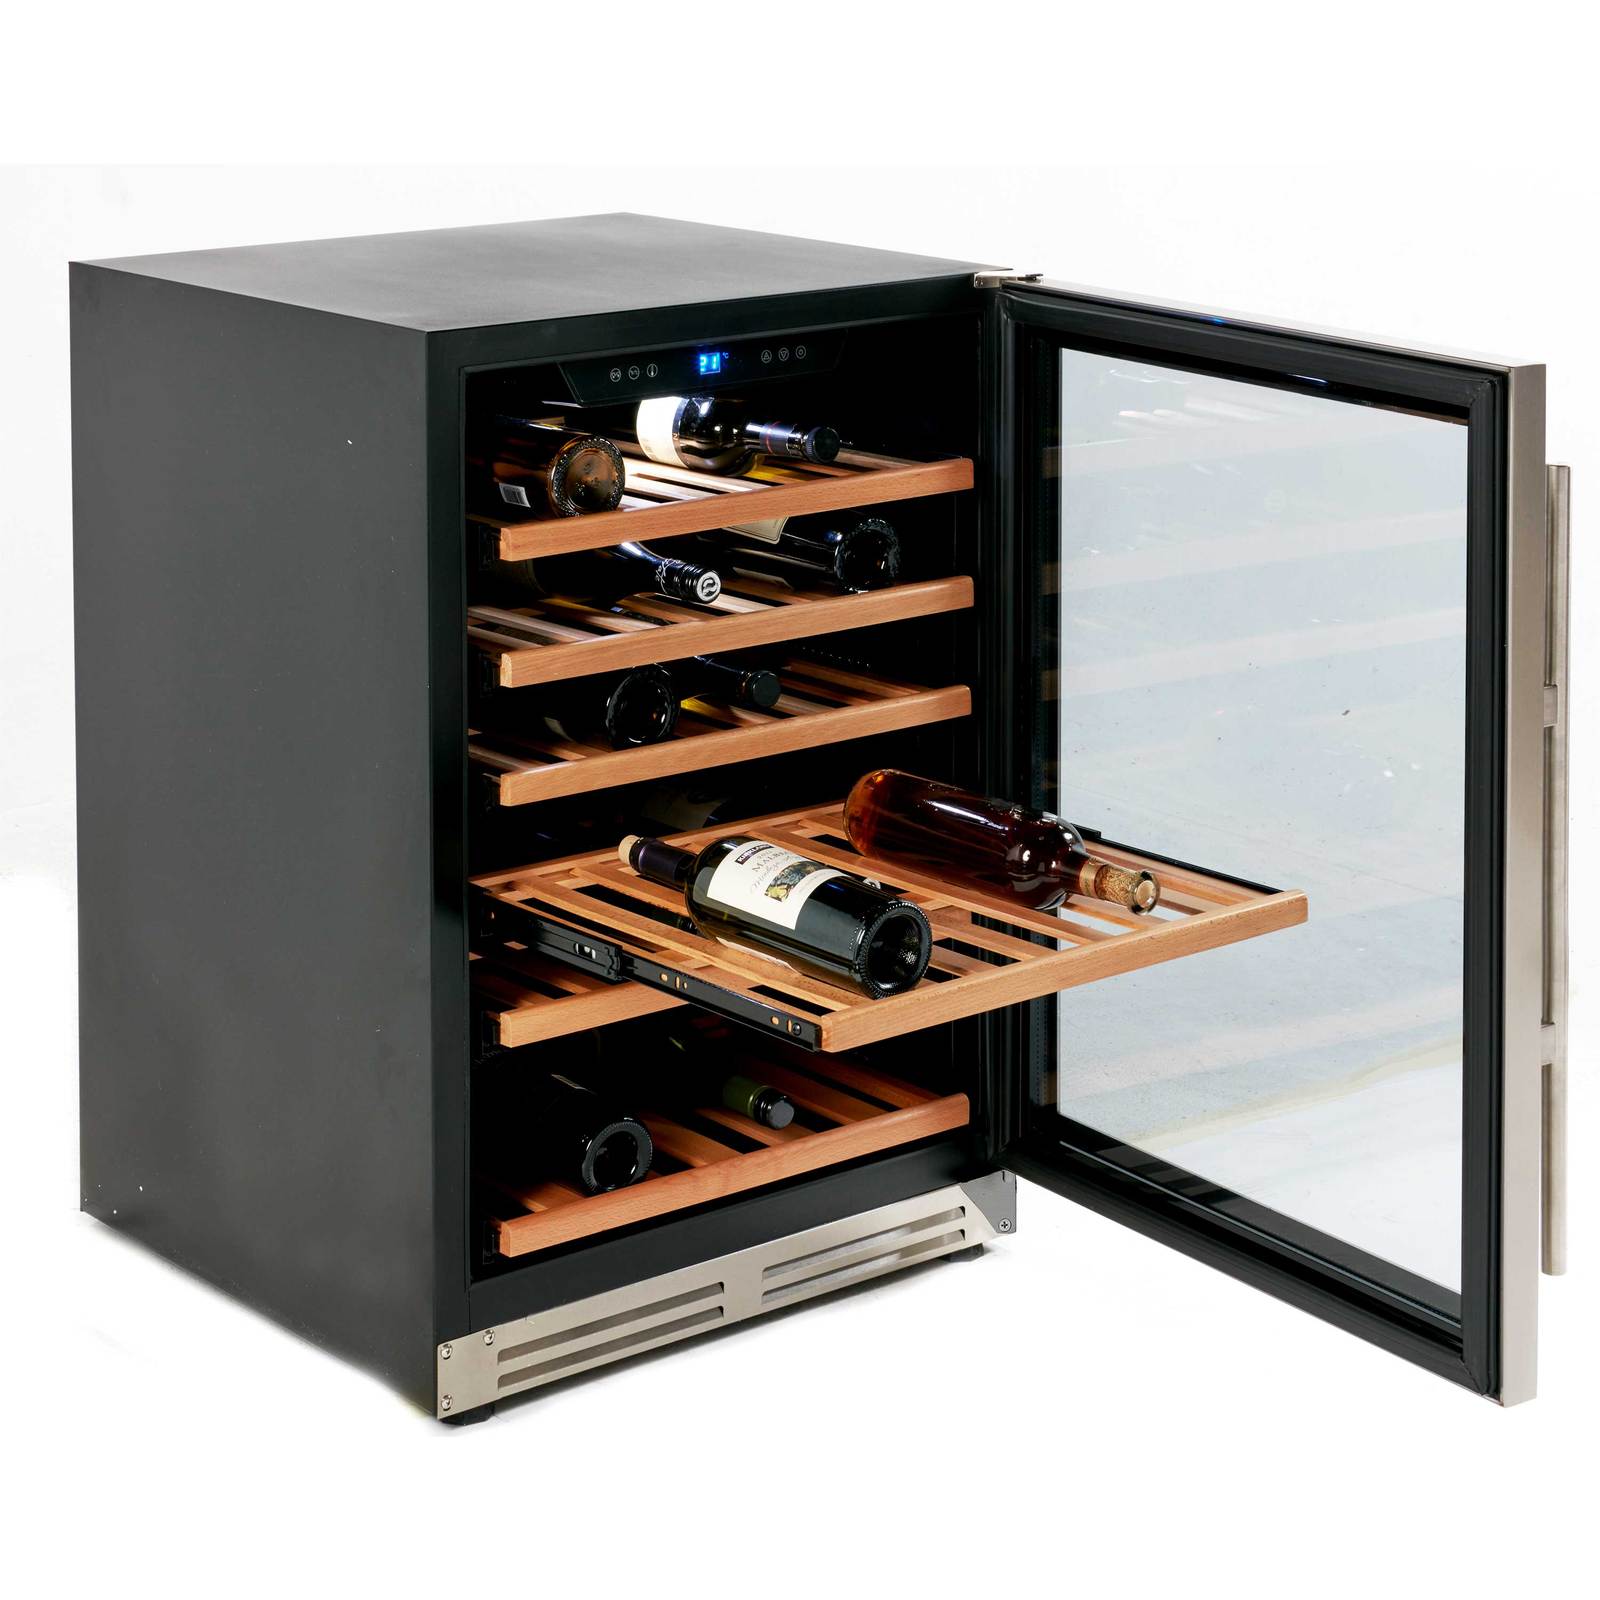 Avanti 51 Bottle DESIGNER Series Wine Cooler - Stainless Steel with Black Cabinet / 51 Bottles